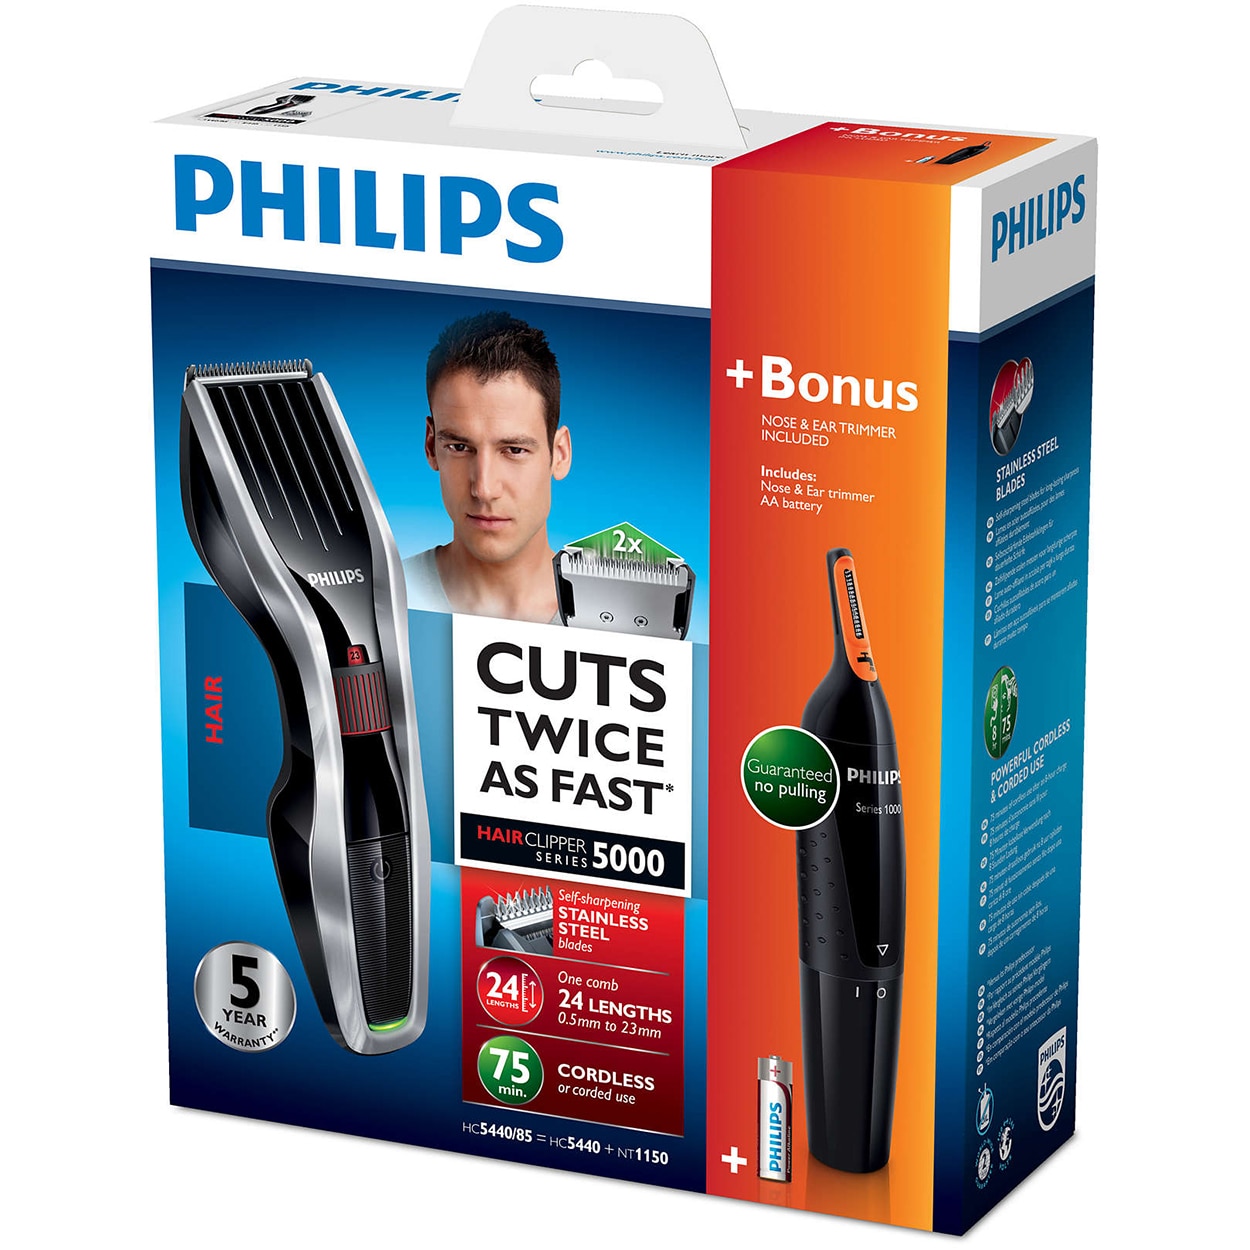 Филипс hc5440. Триммер Philips hc5440. Philips Series 5000 hc5440/15. Philips hair Clipper 5000 Series. Philips fast